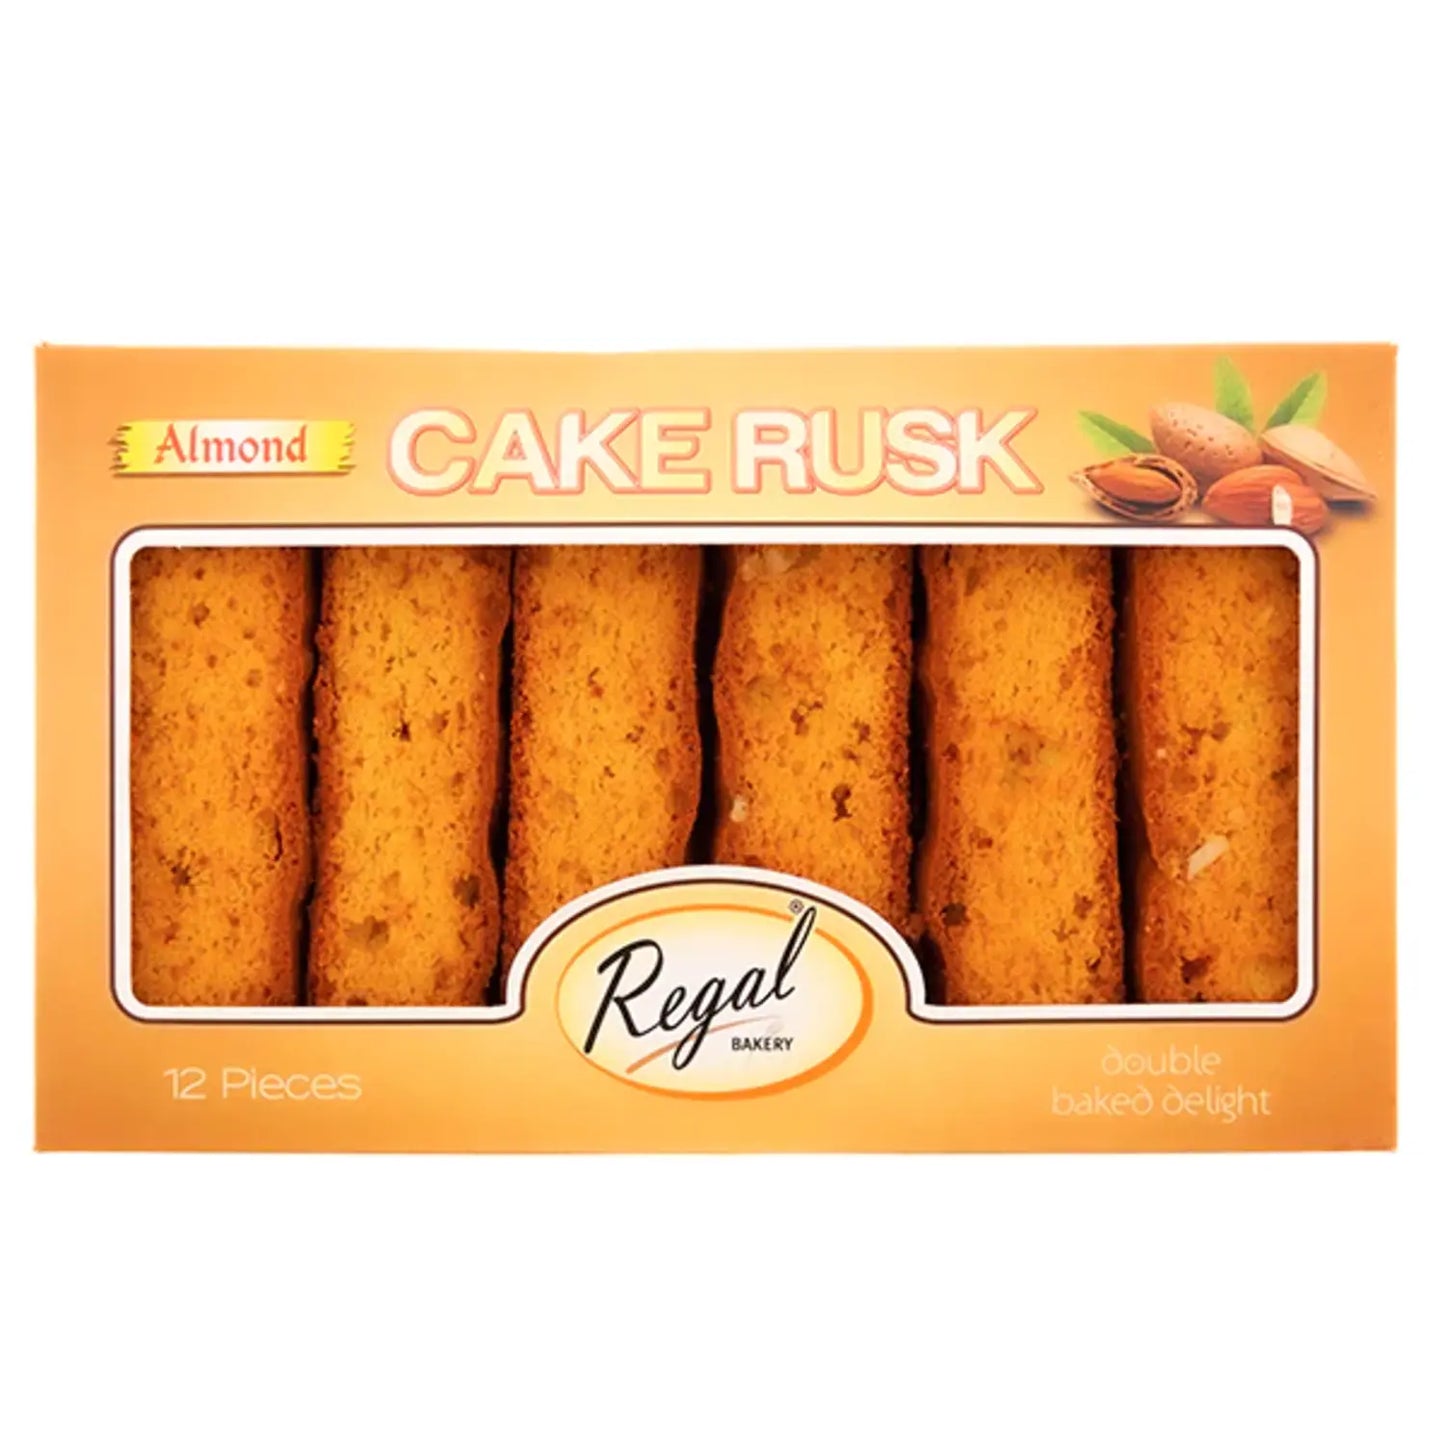 Regal Almond Cake Rusks 12pc